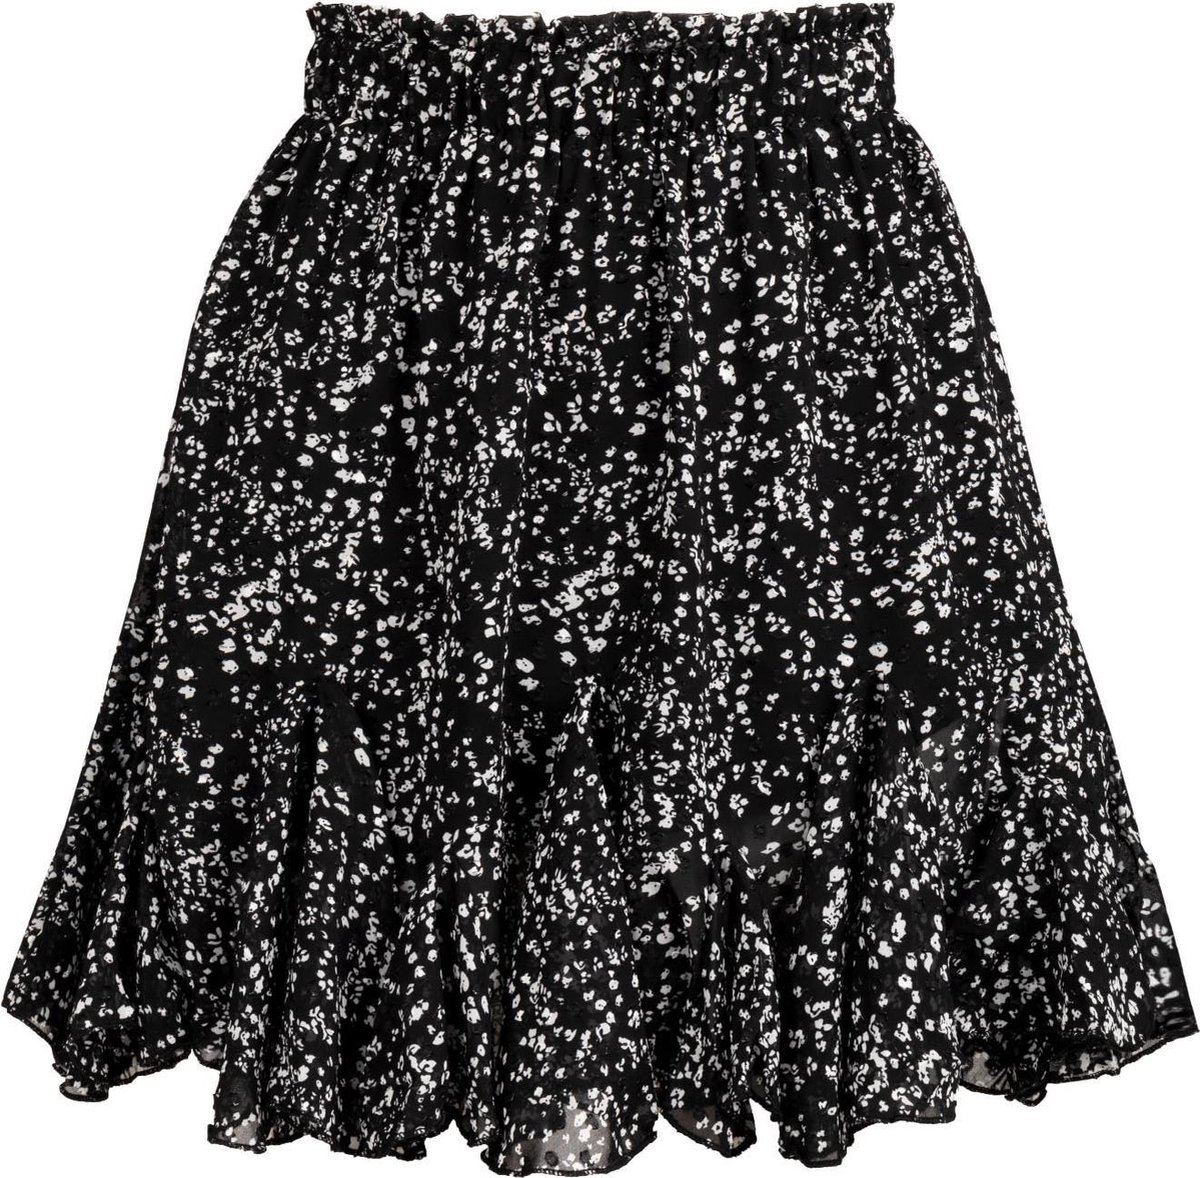 Flowy mini skirt black